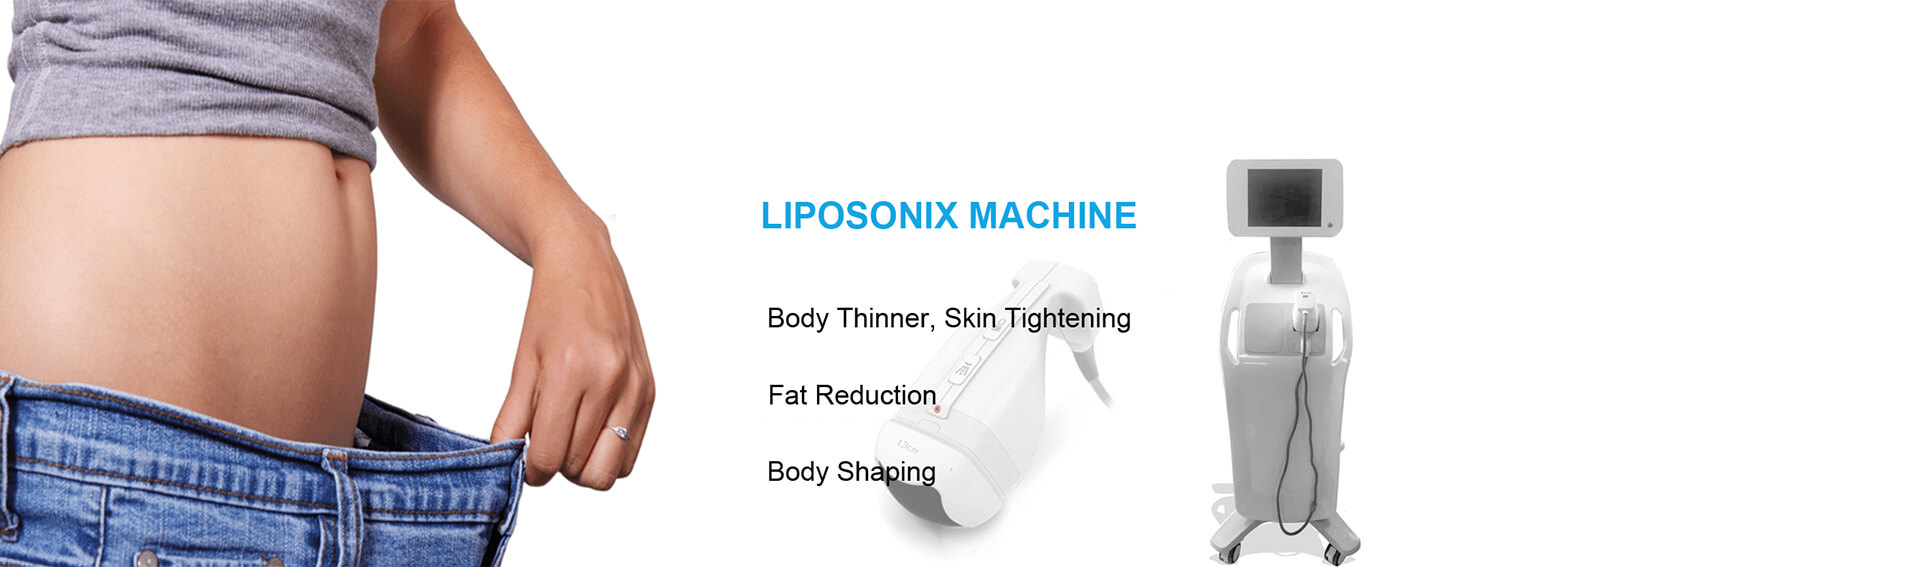 Professional Liposonix Machine